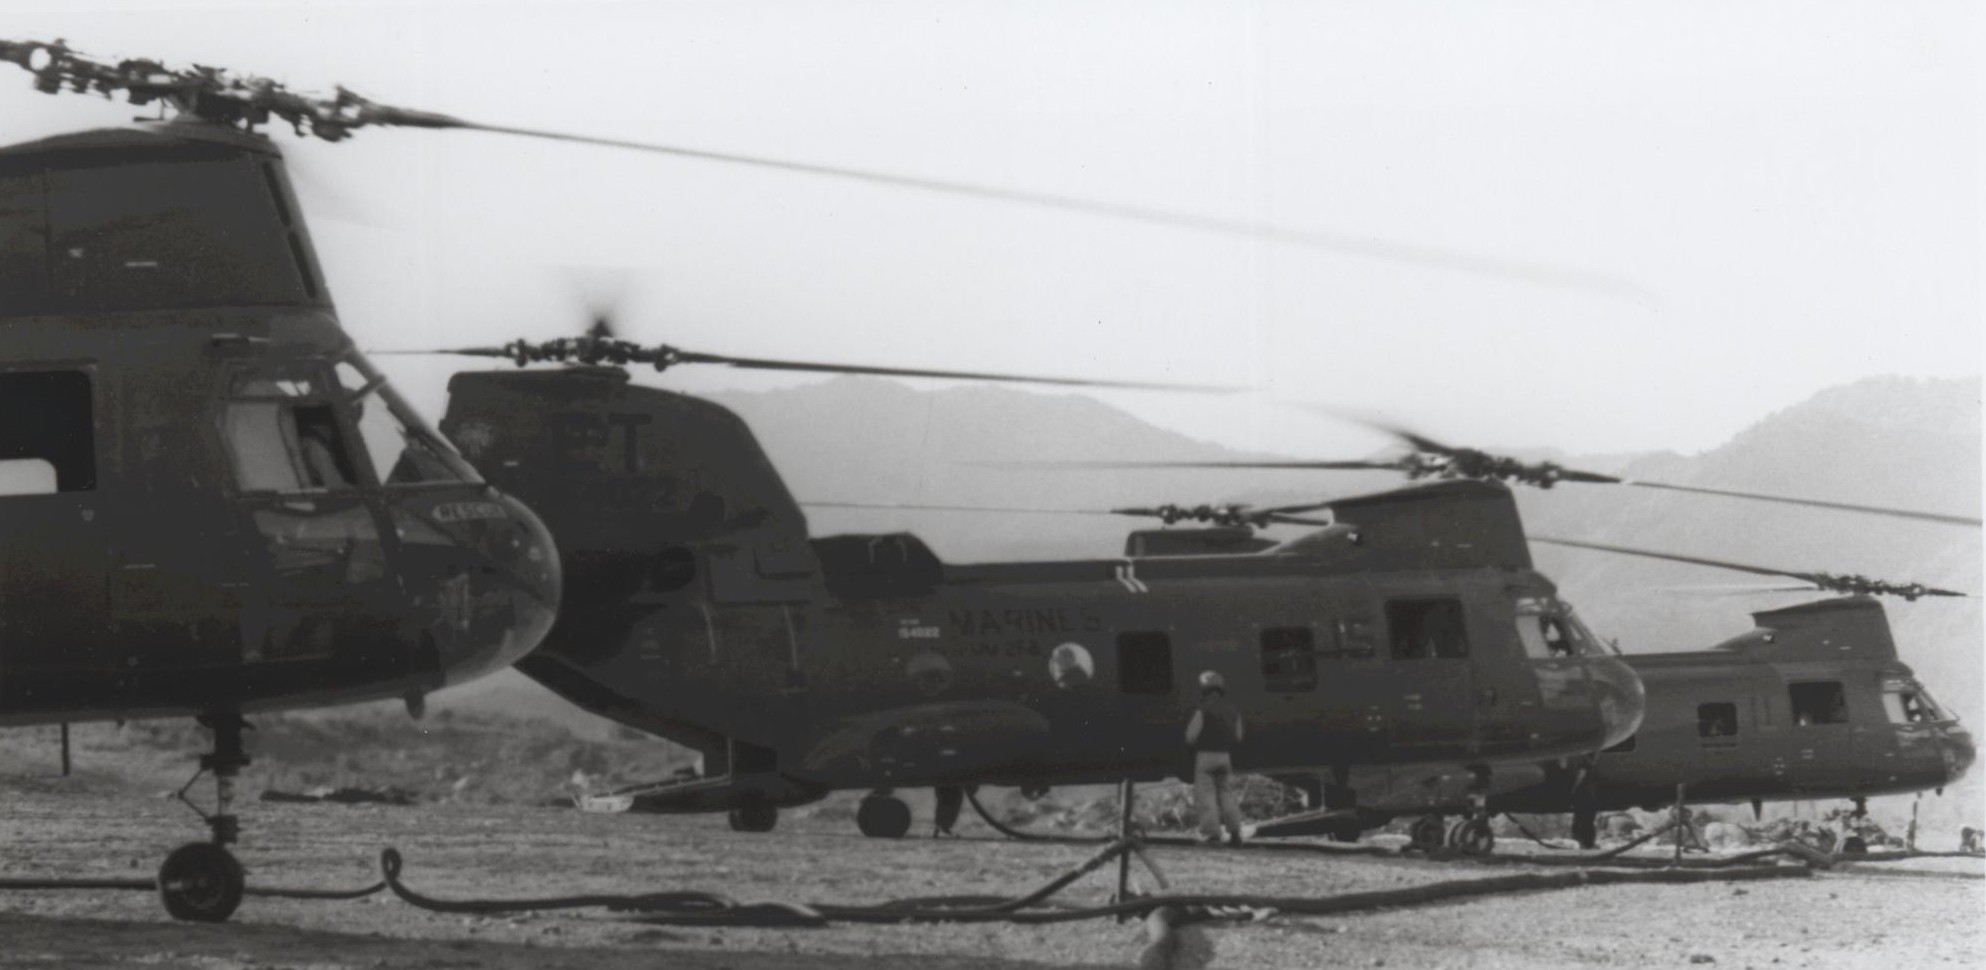 hmm-262 flying tigers ch-46a sea knight marine medium helicopter squadron usmc vietnam war 1968 25